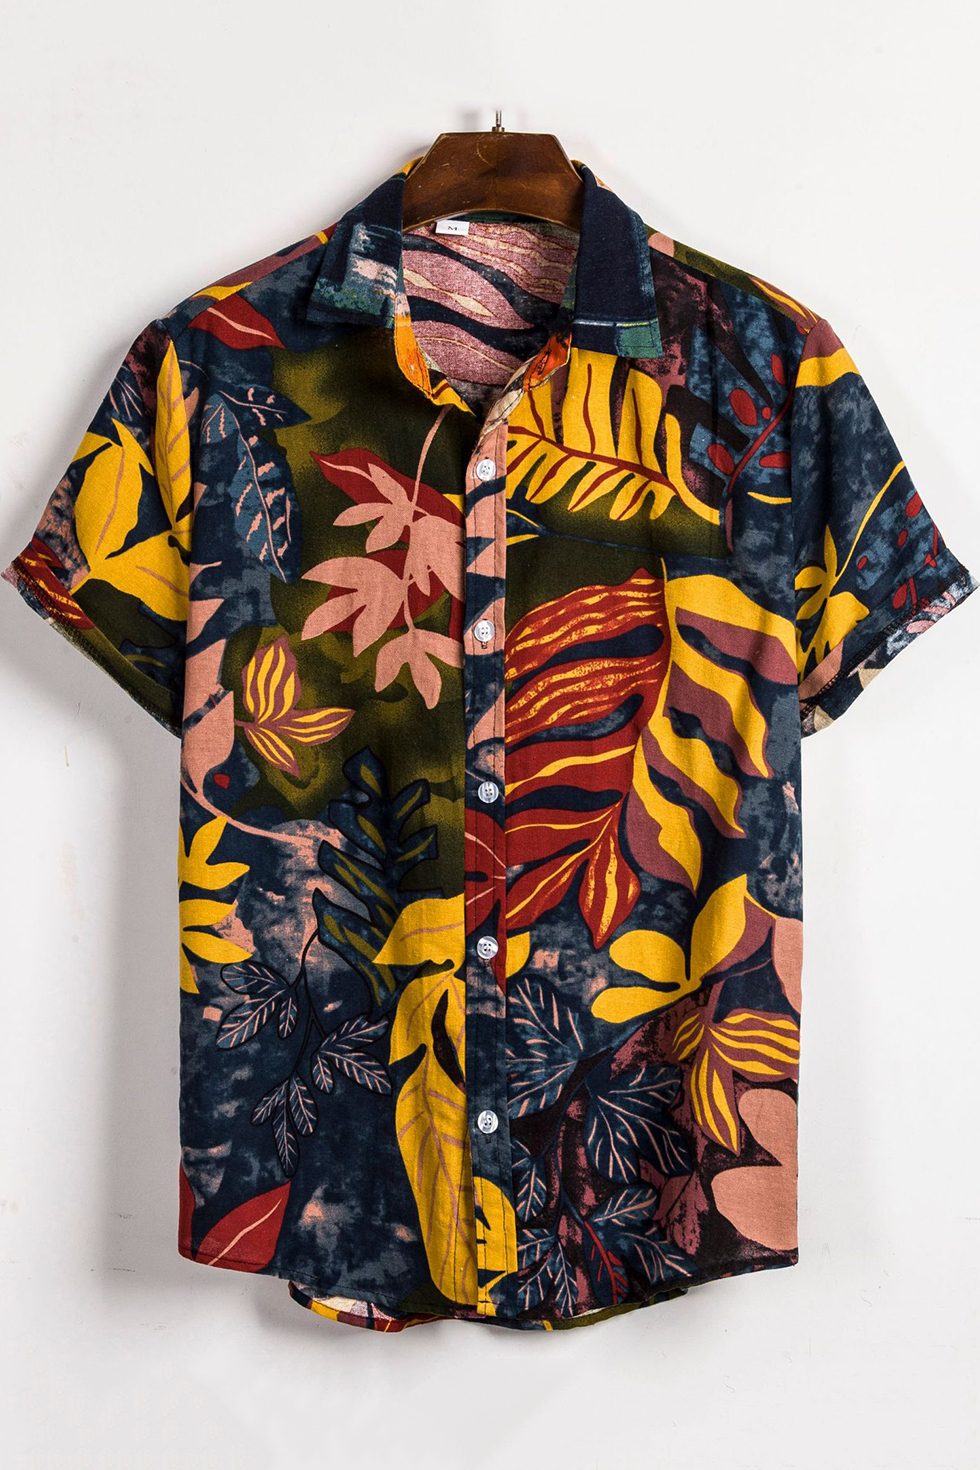 InterestPrint Autumnal Leaves Short Sleeve Beach Shirts Button Down Tees Summer Shirts for Men 